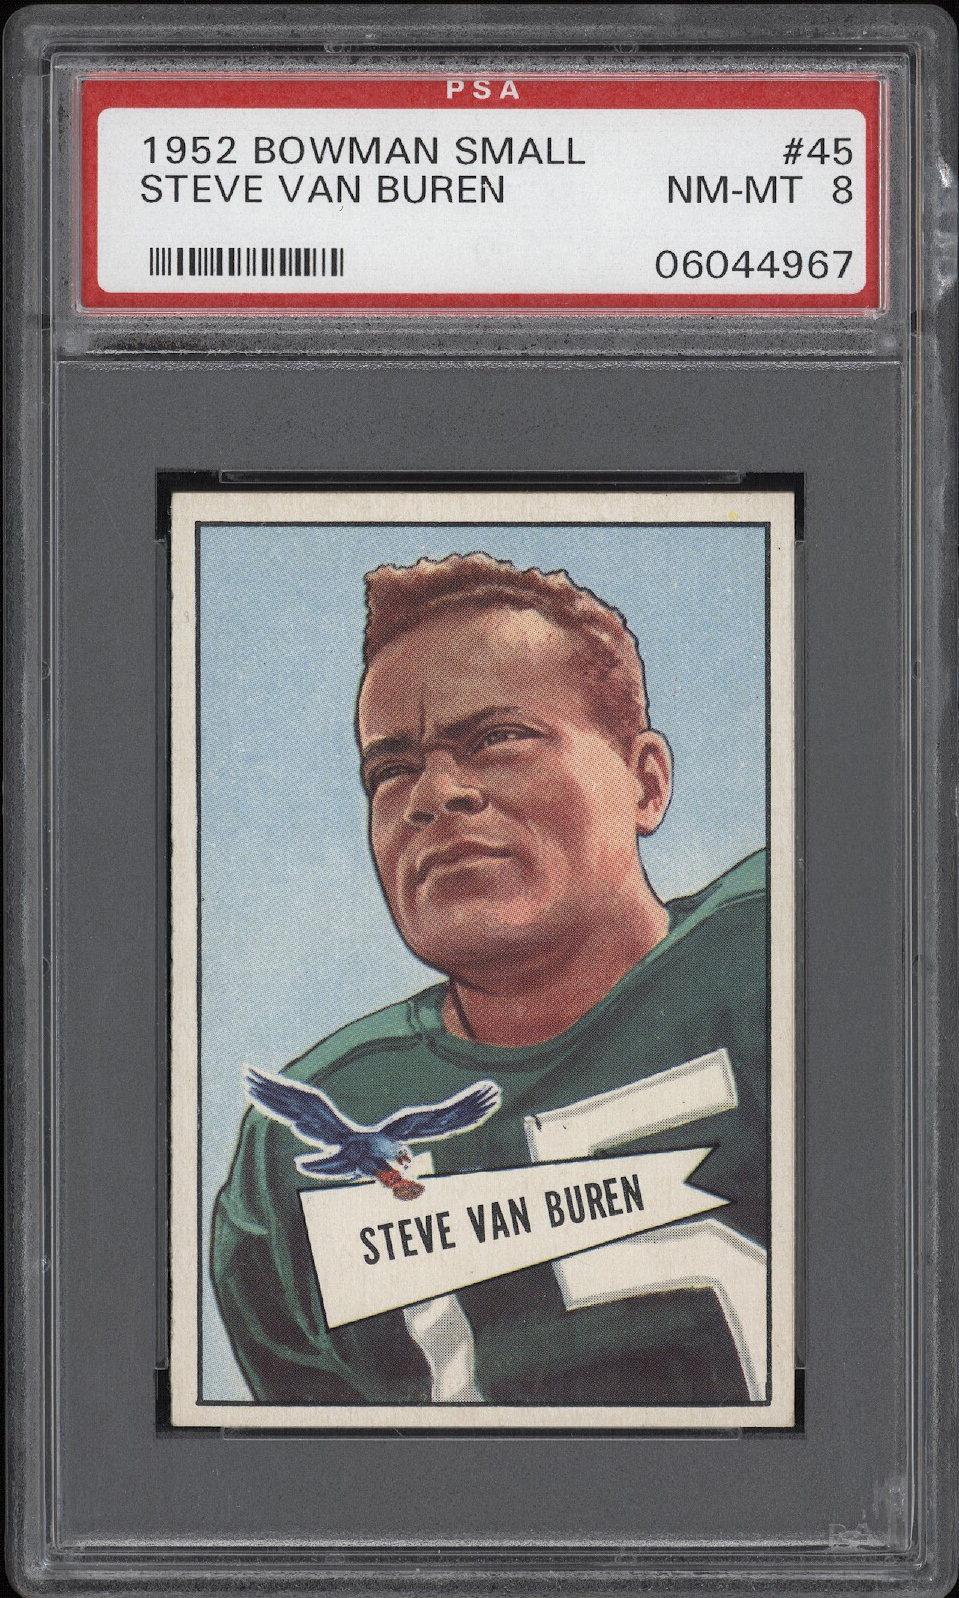  1952 Bowman Small #45 Steve Van Buren (HOF) - PSA NM-MT 8